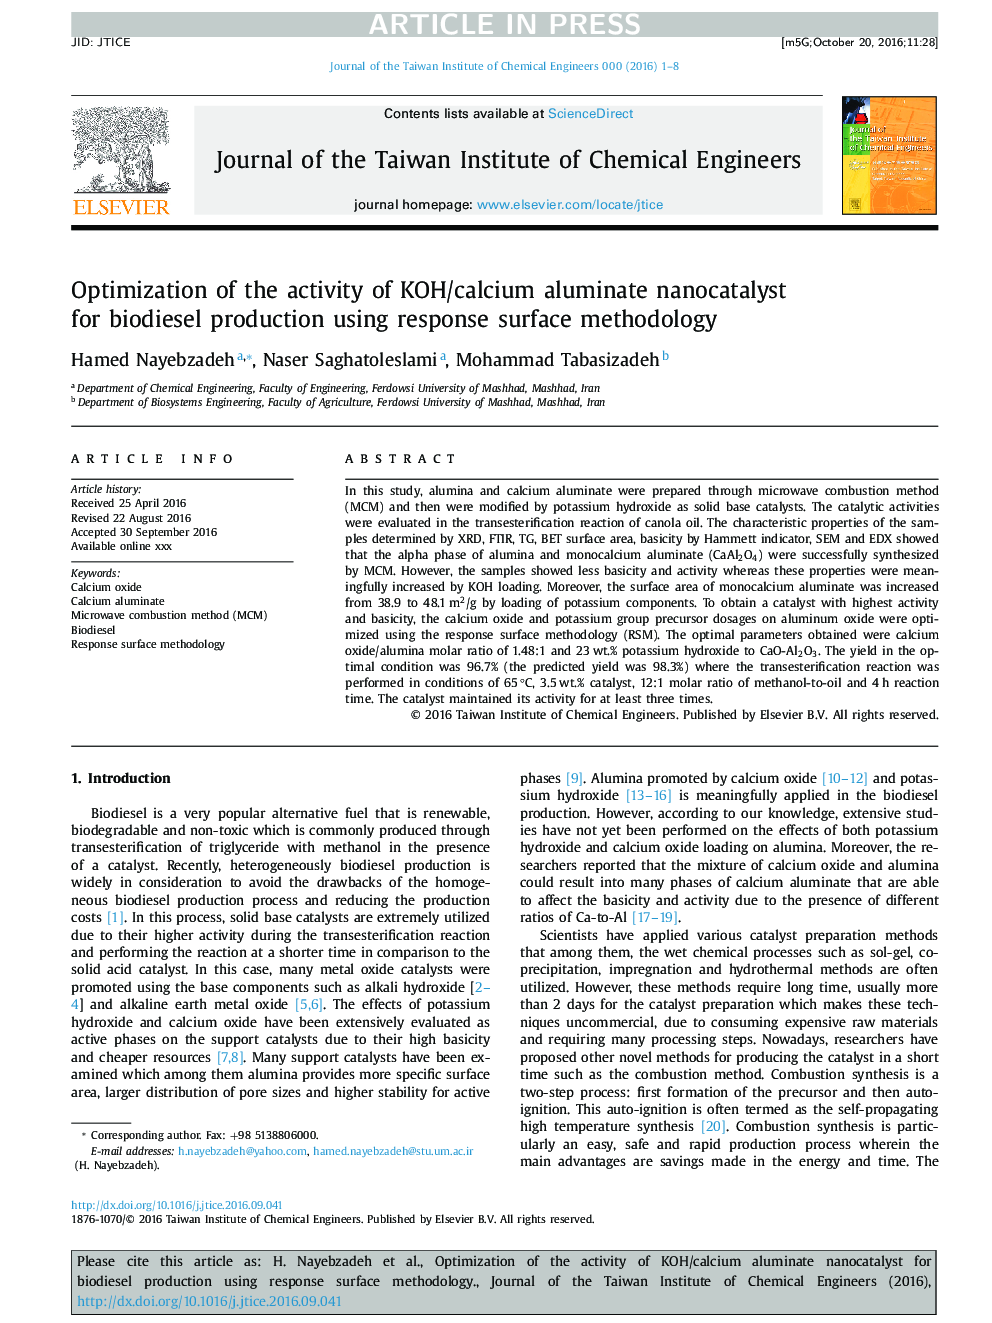 Optimization of the activity of KOH/calcium aluminate nanocatalyst for biodiesel production using response surface methodology